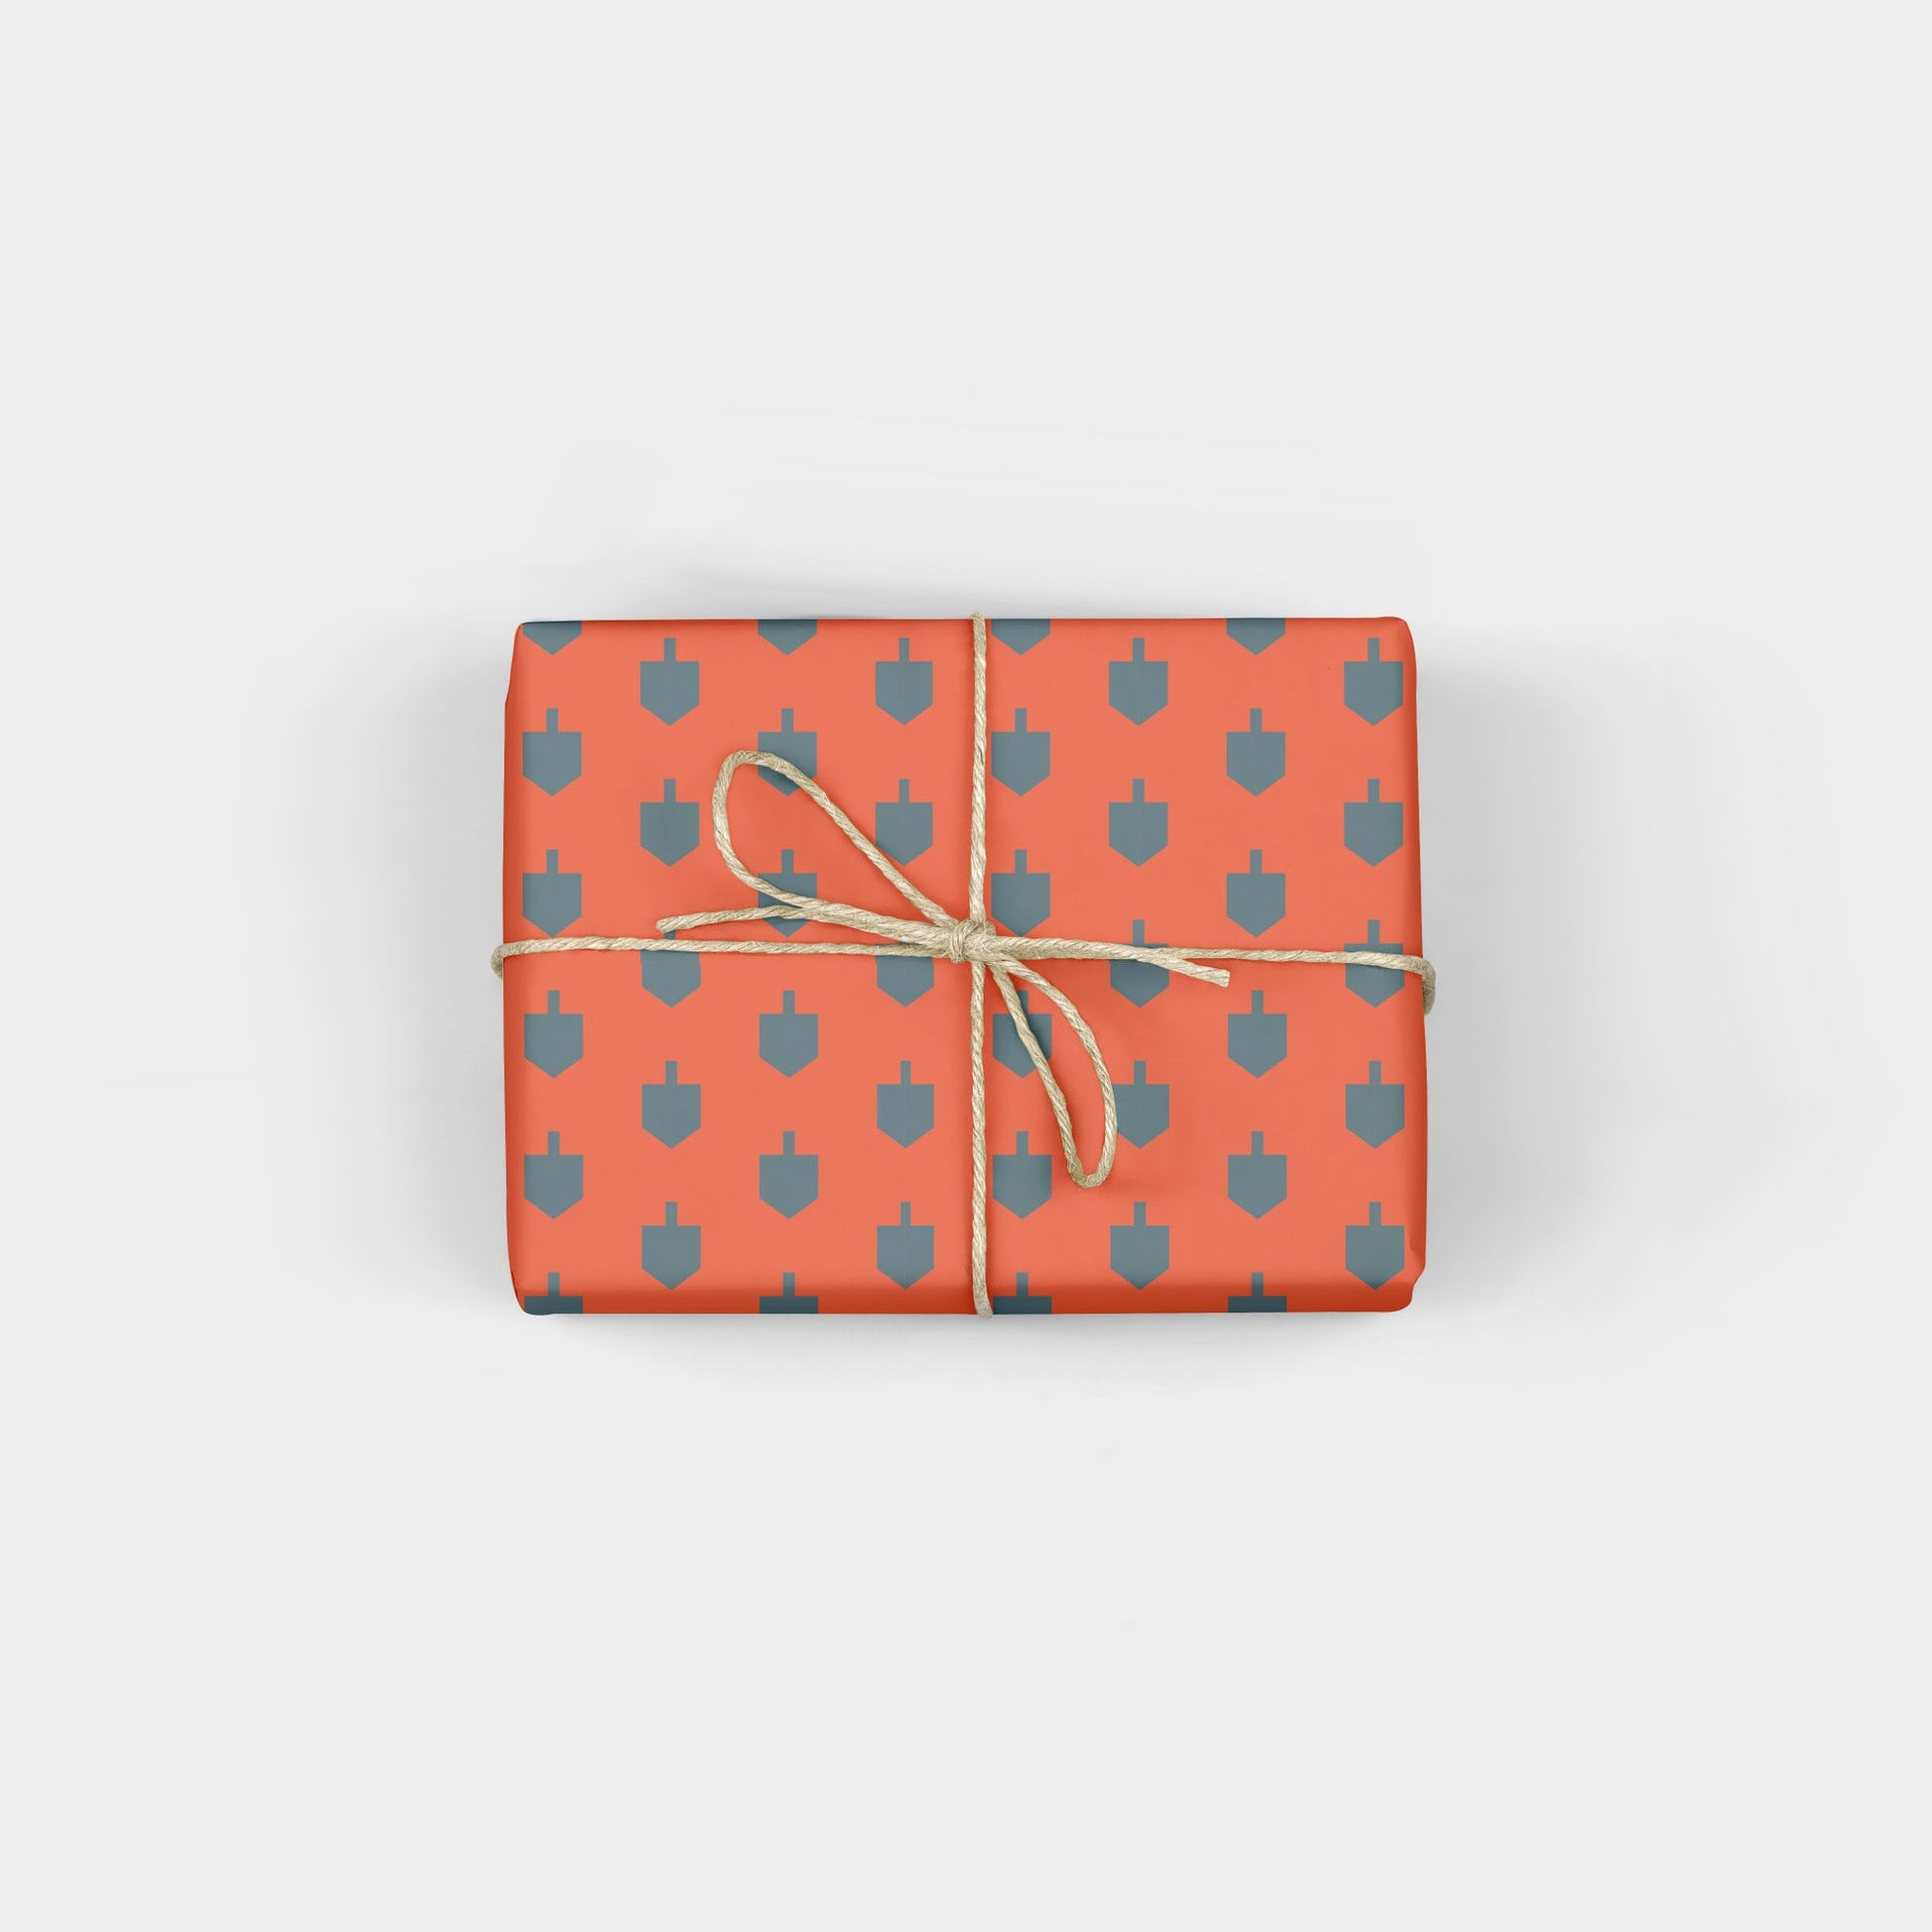 Minimal Dreidel Holiday Gift Wrap The Design Craft